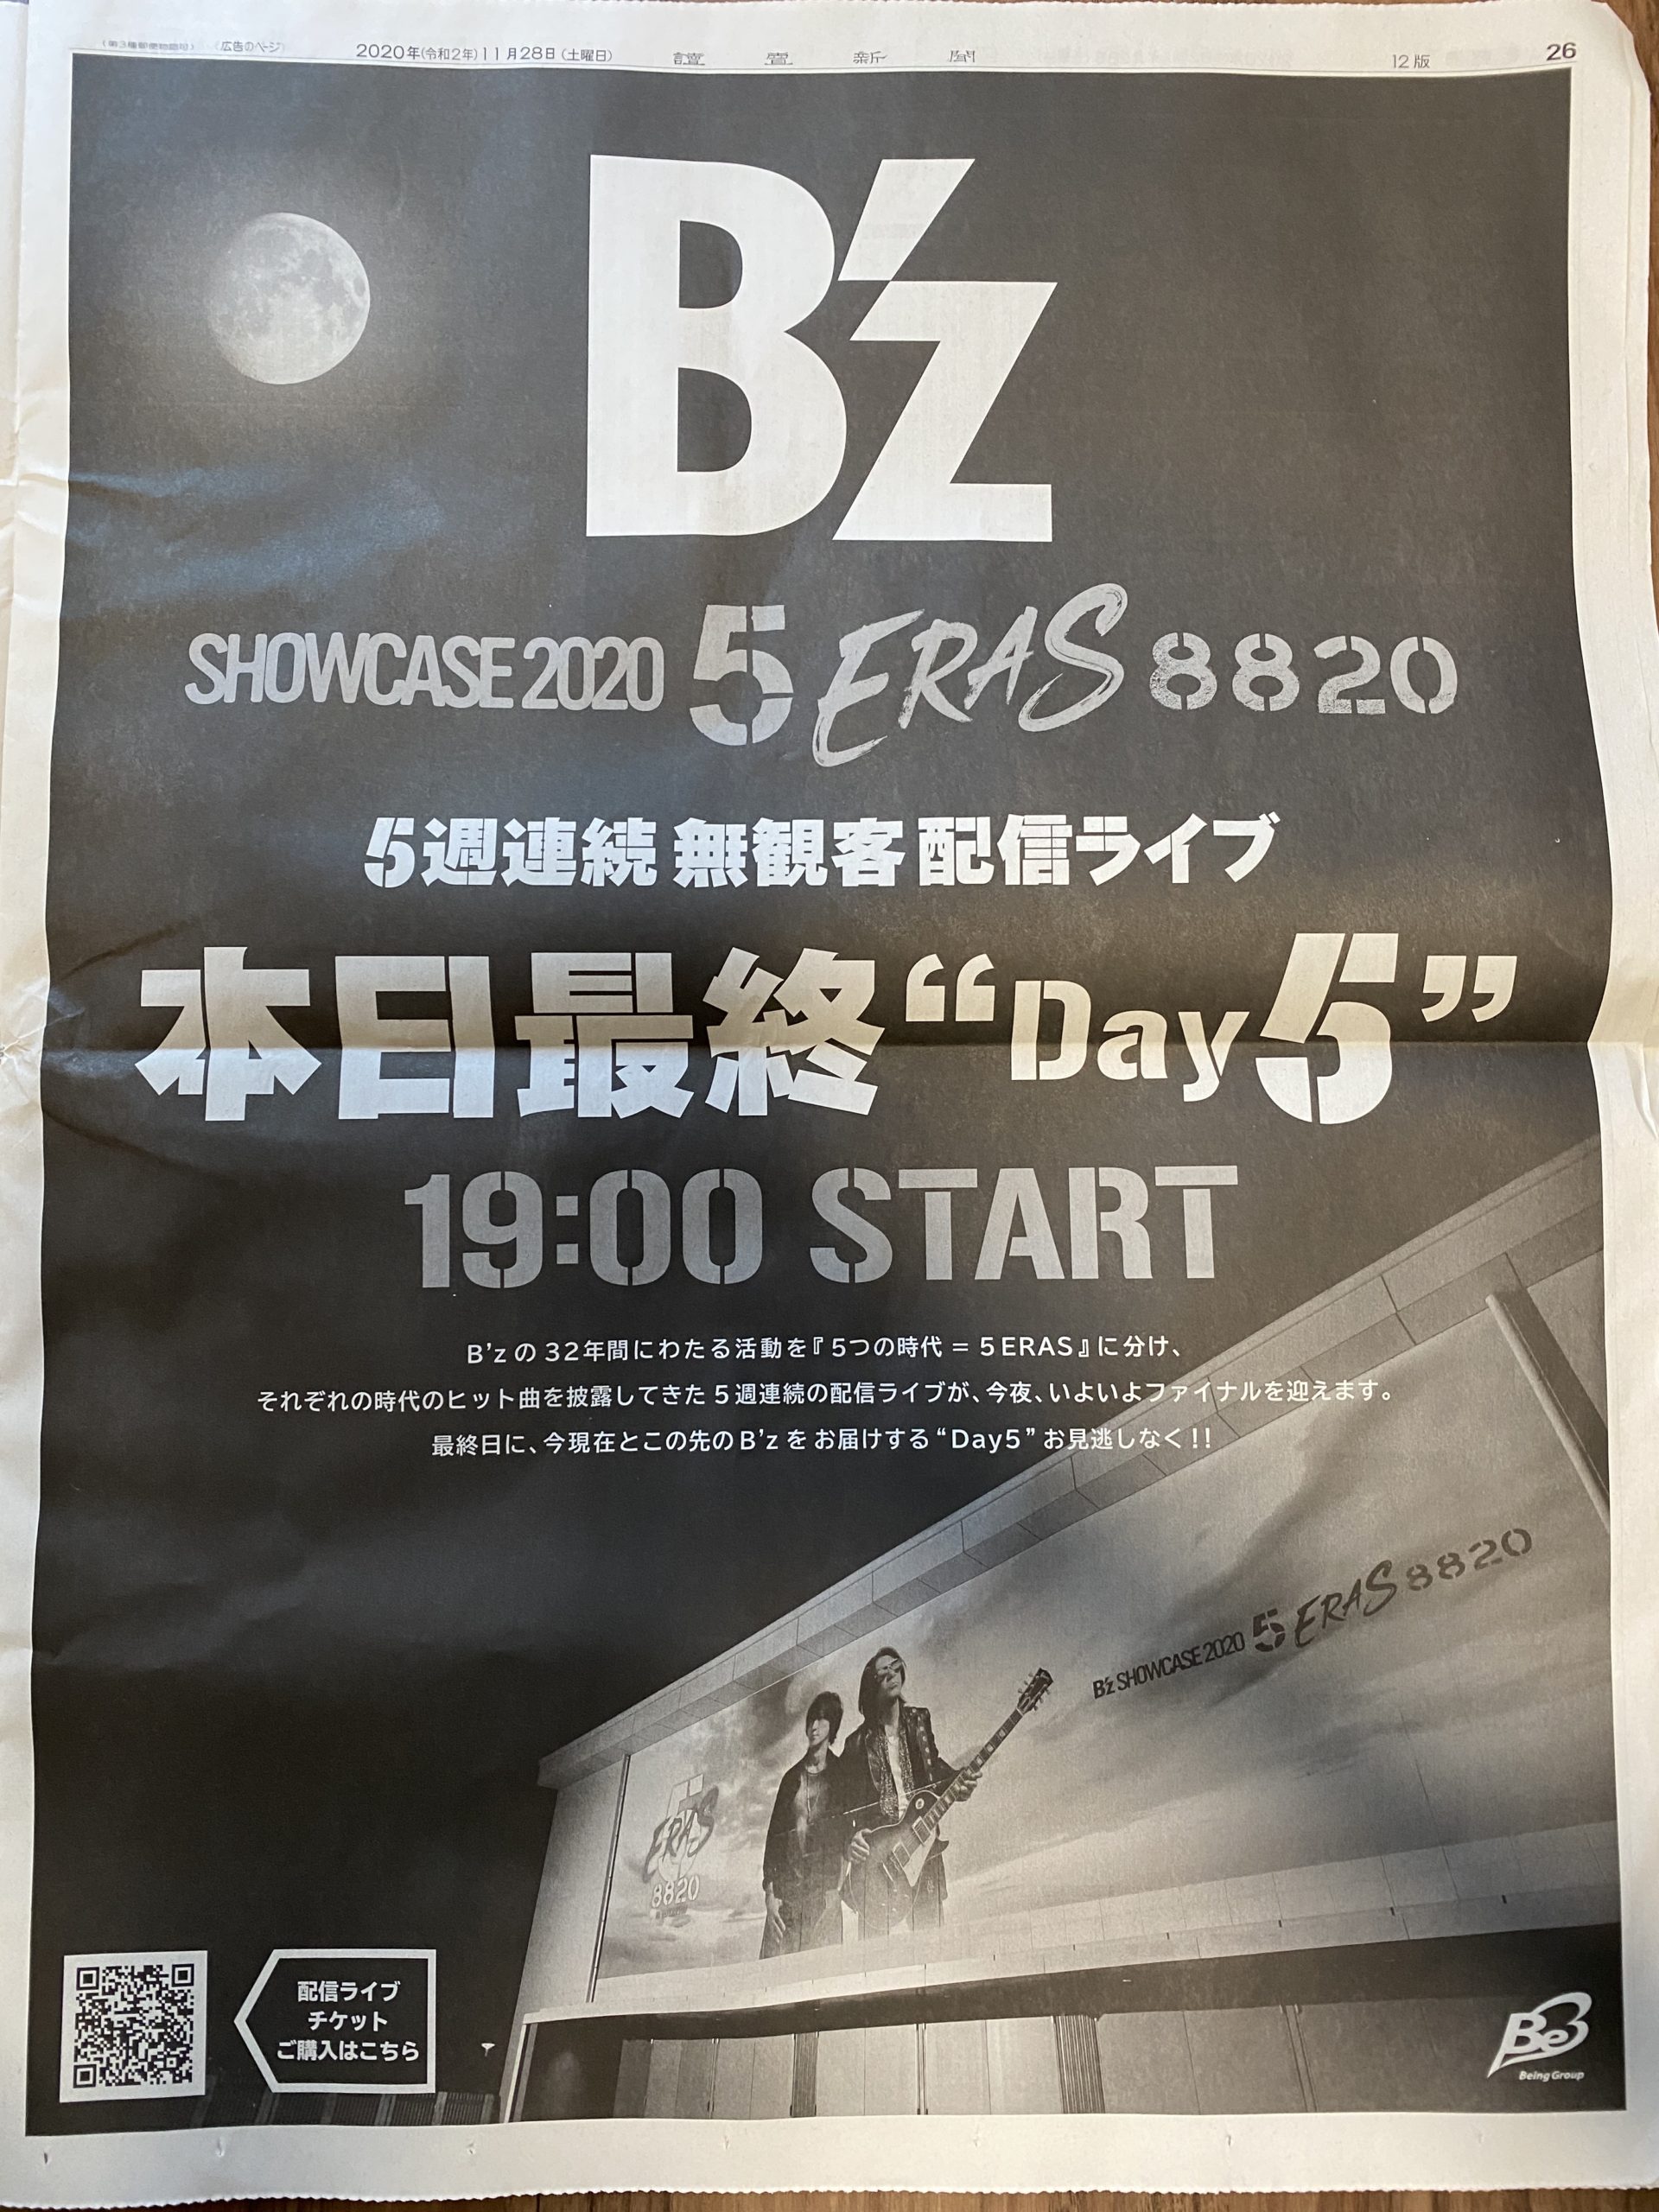 B'zの無観客配信ライブ『B’z SHOWCASE 2020 -5 ERAS 8820- Day5』の新聞広告